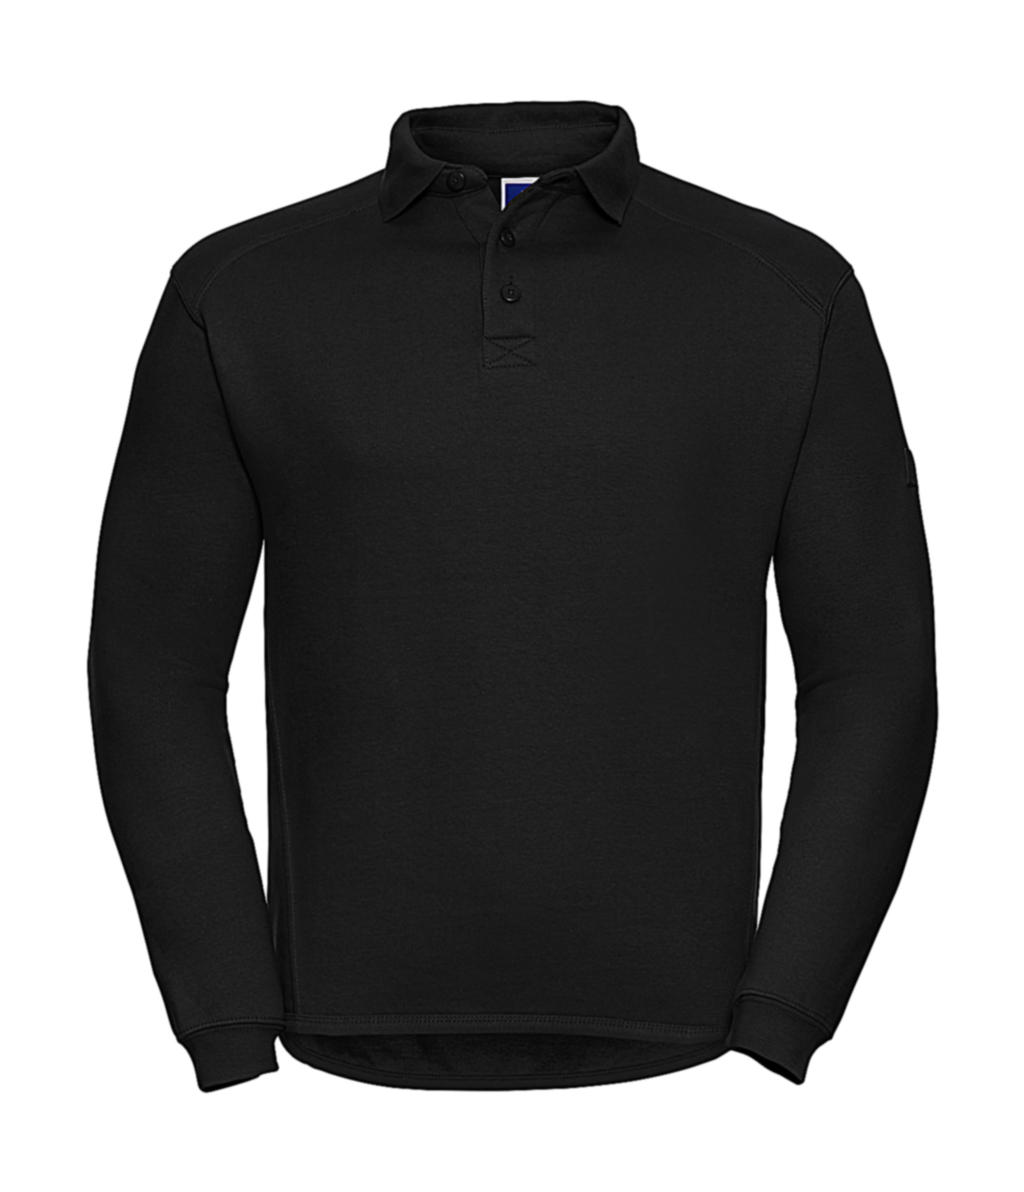  Heavy Duty Collar Sweatshirt in Farbe Black